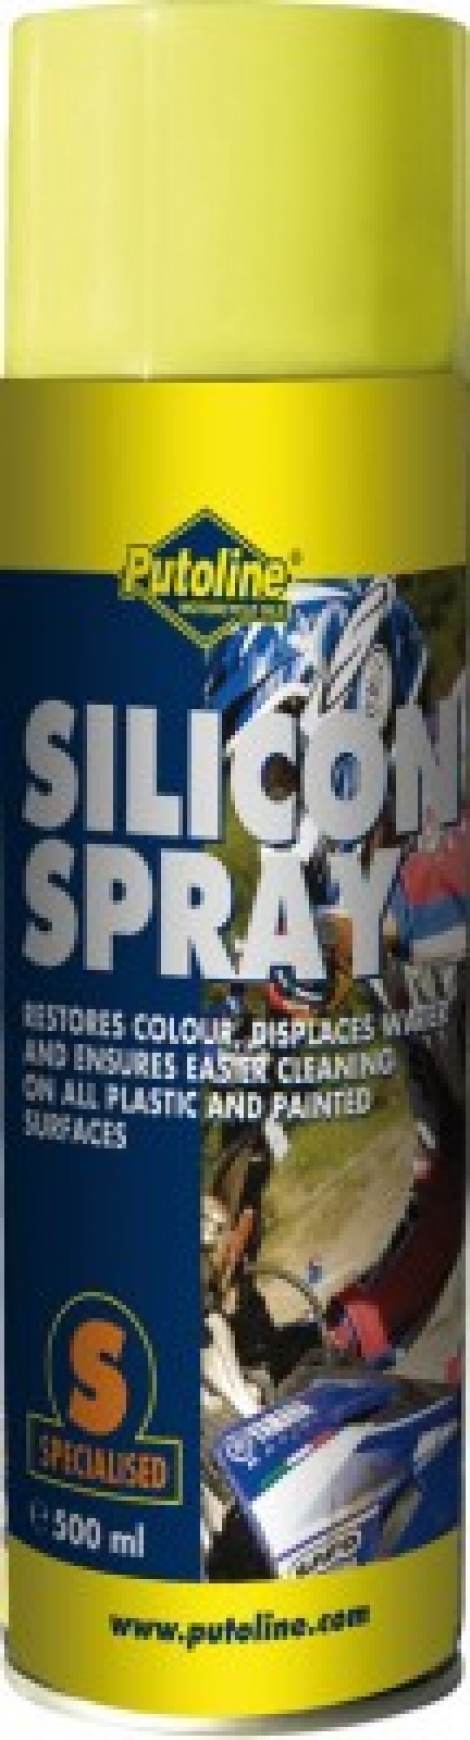 PUTOLINE Silicone spray 500ml P70334